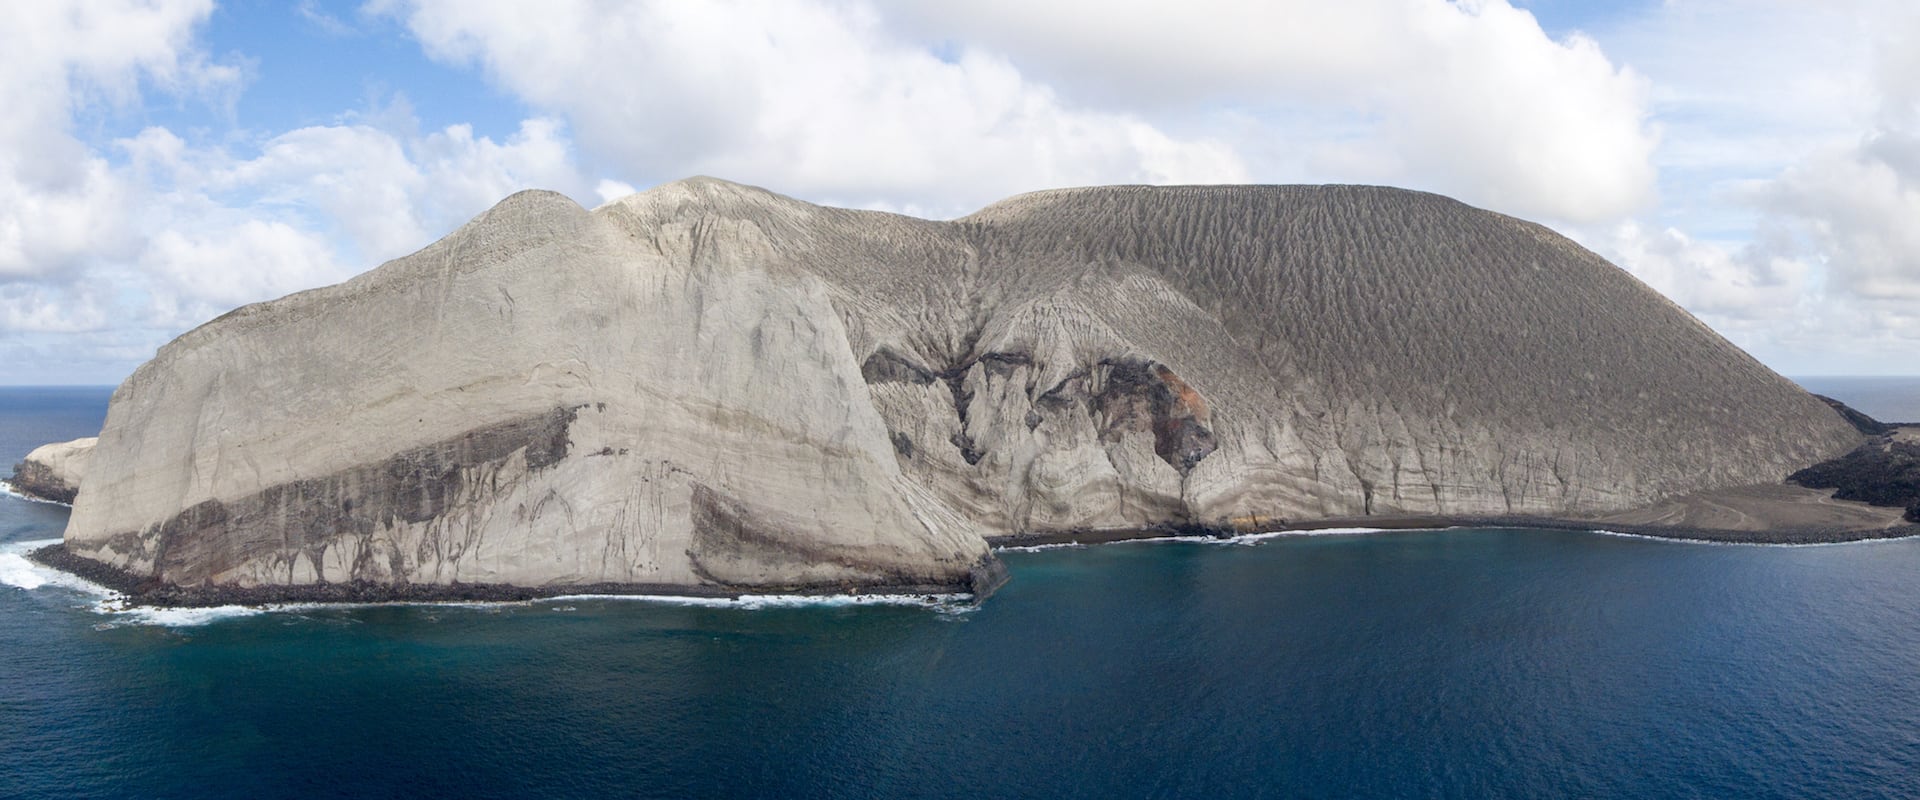 Socorro Islands Liveaboard Diving